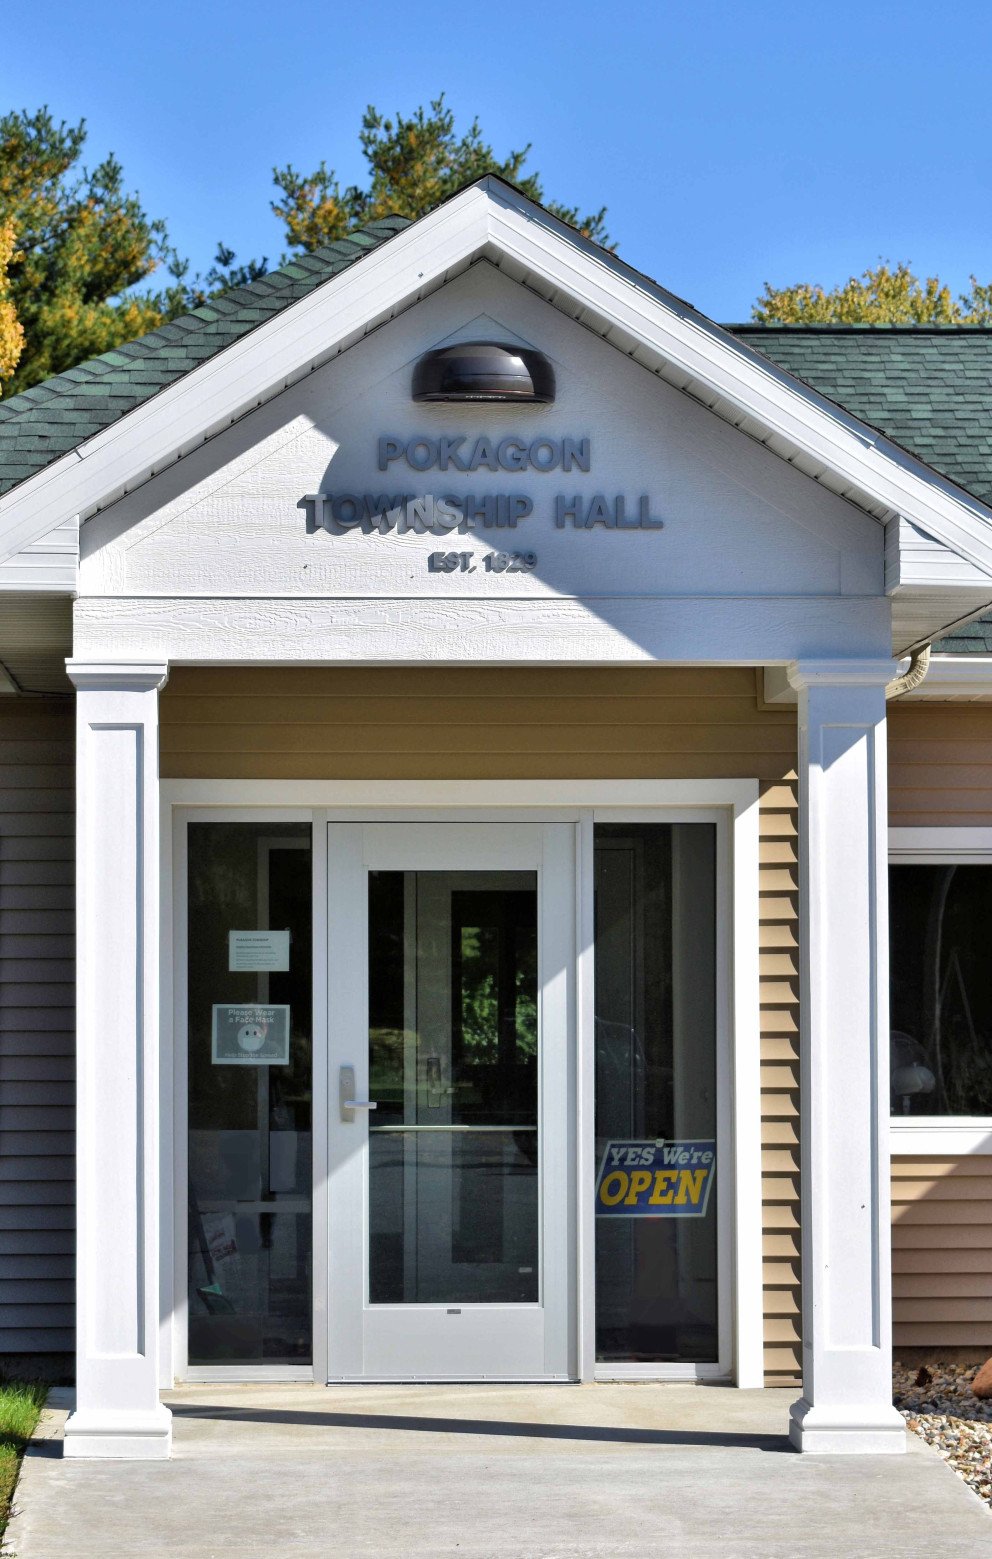 Pokagon Township Hall Front Entrance